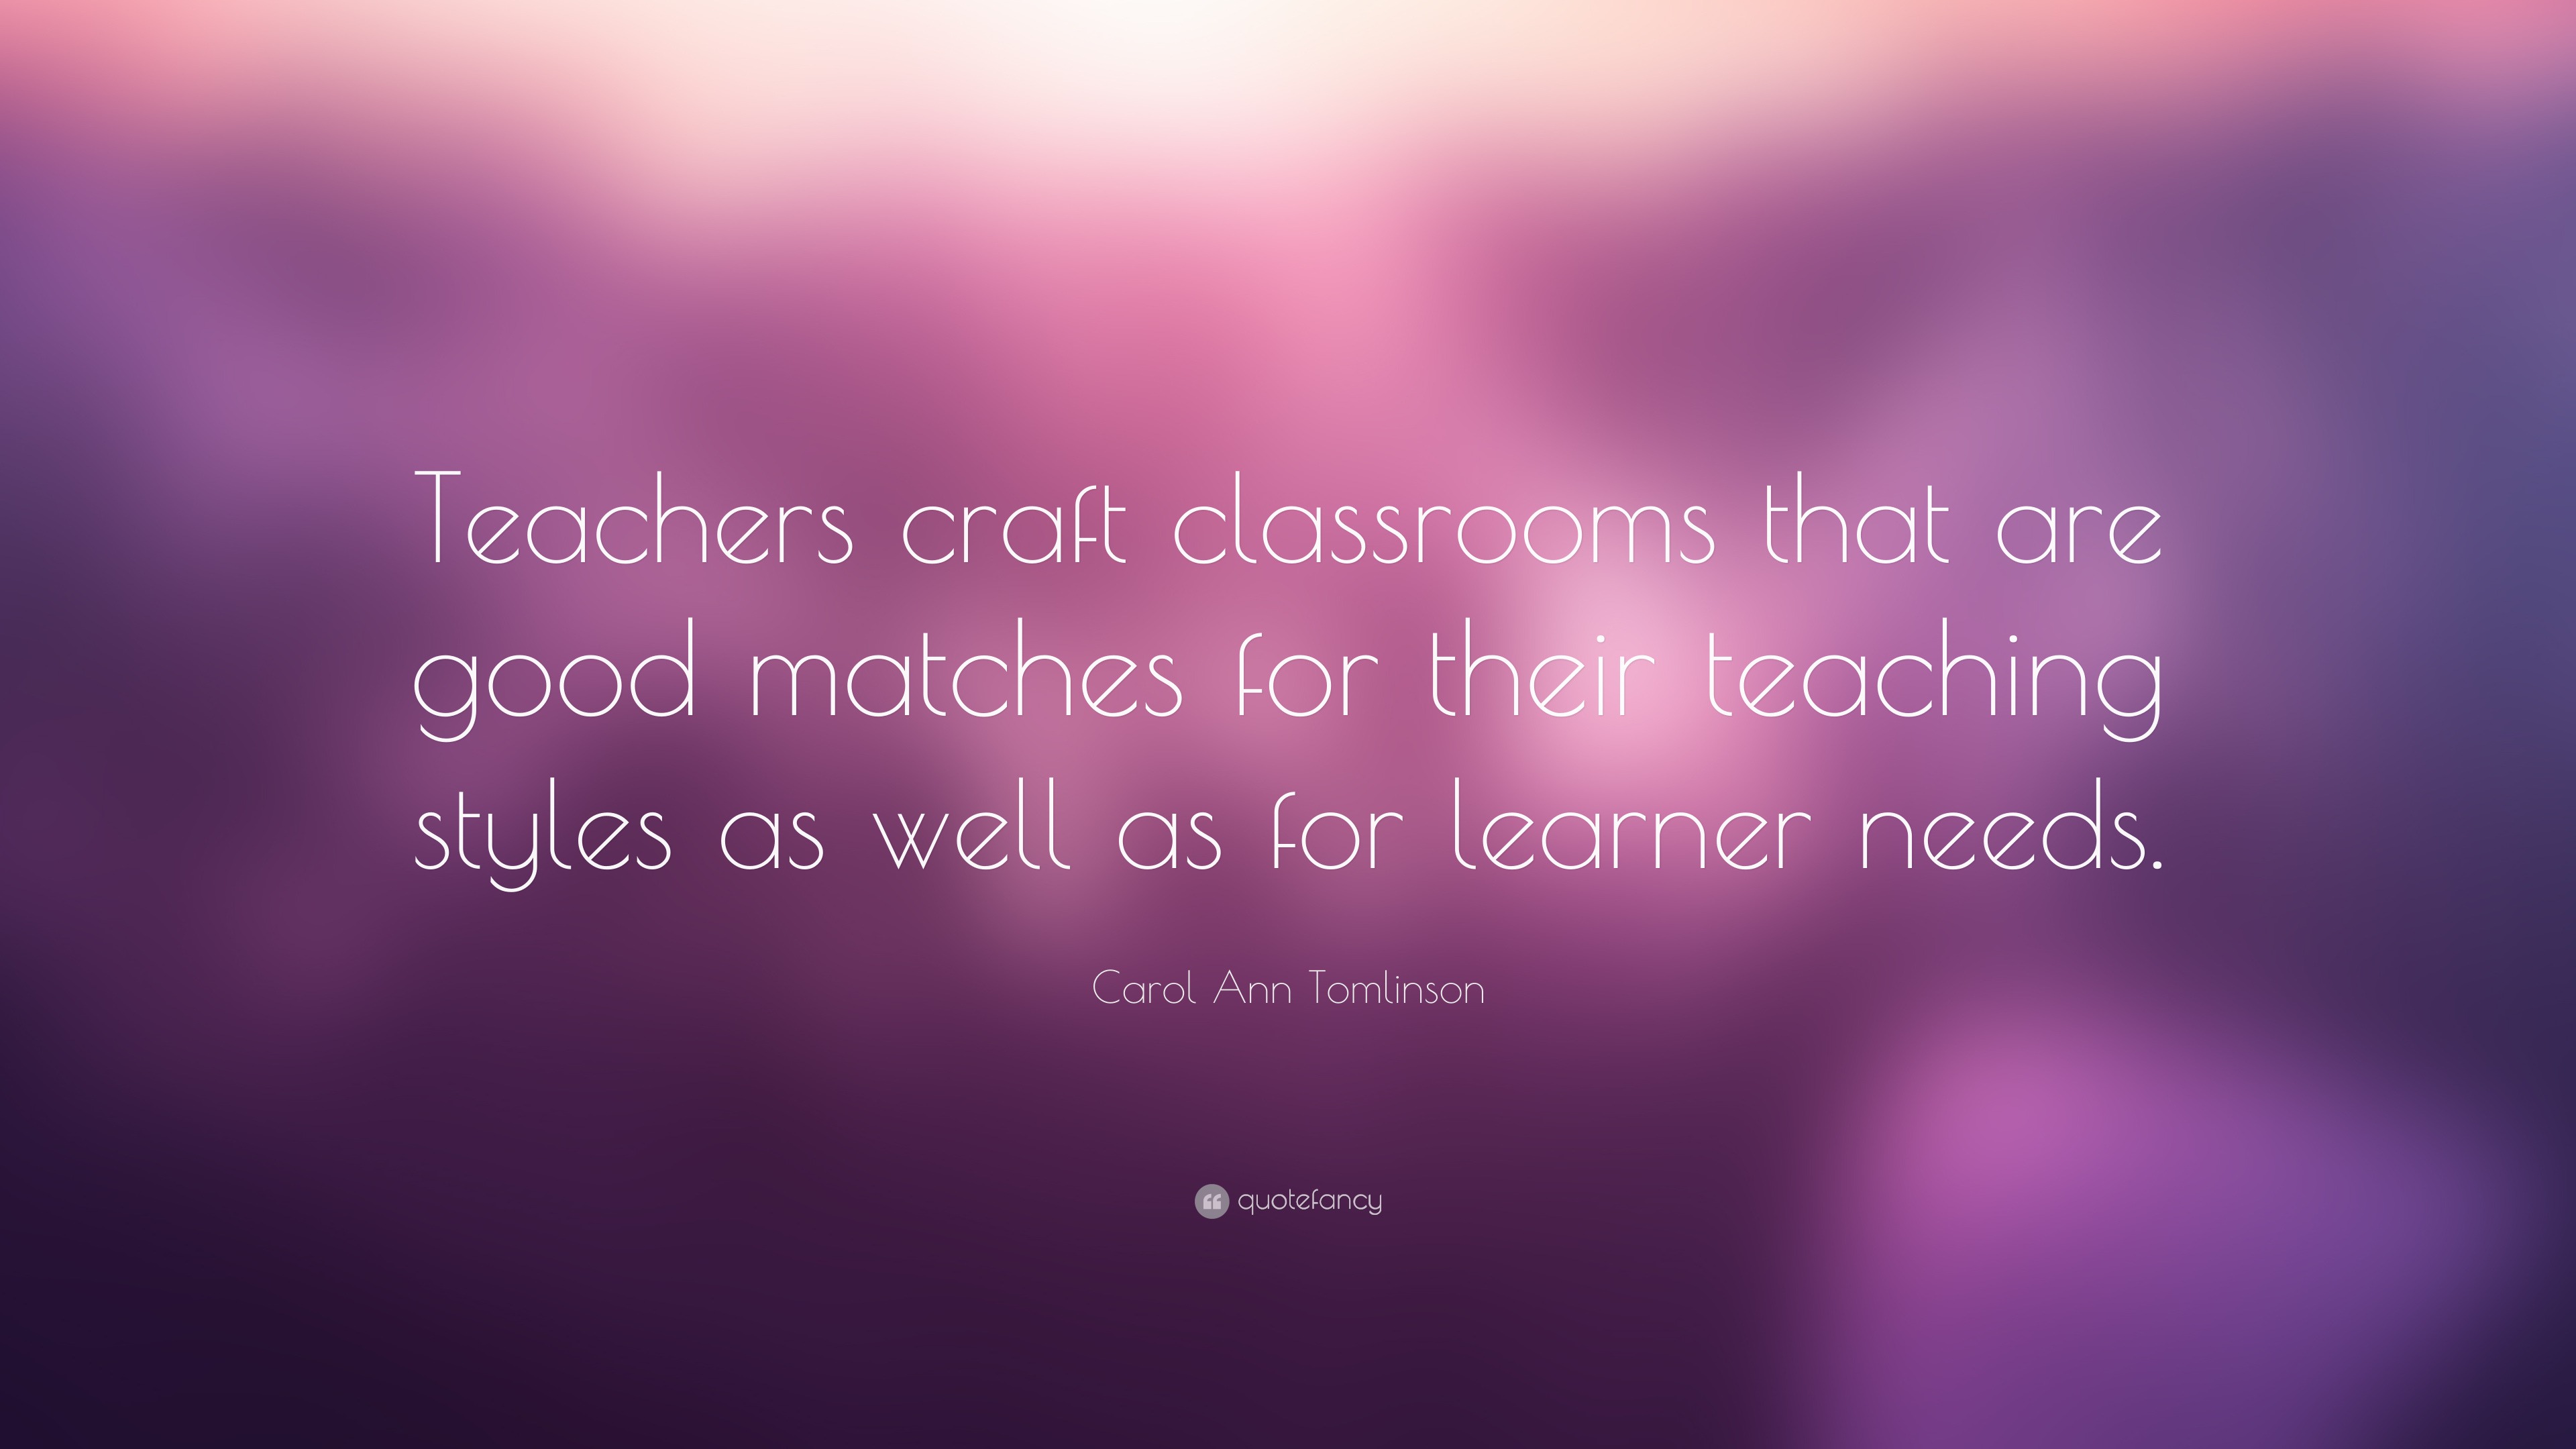 Carol Ann Tomlinson Quote: “Teachers craft classrooms that are good ...